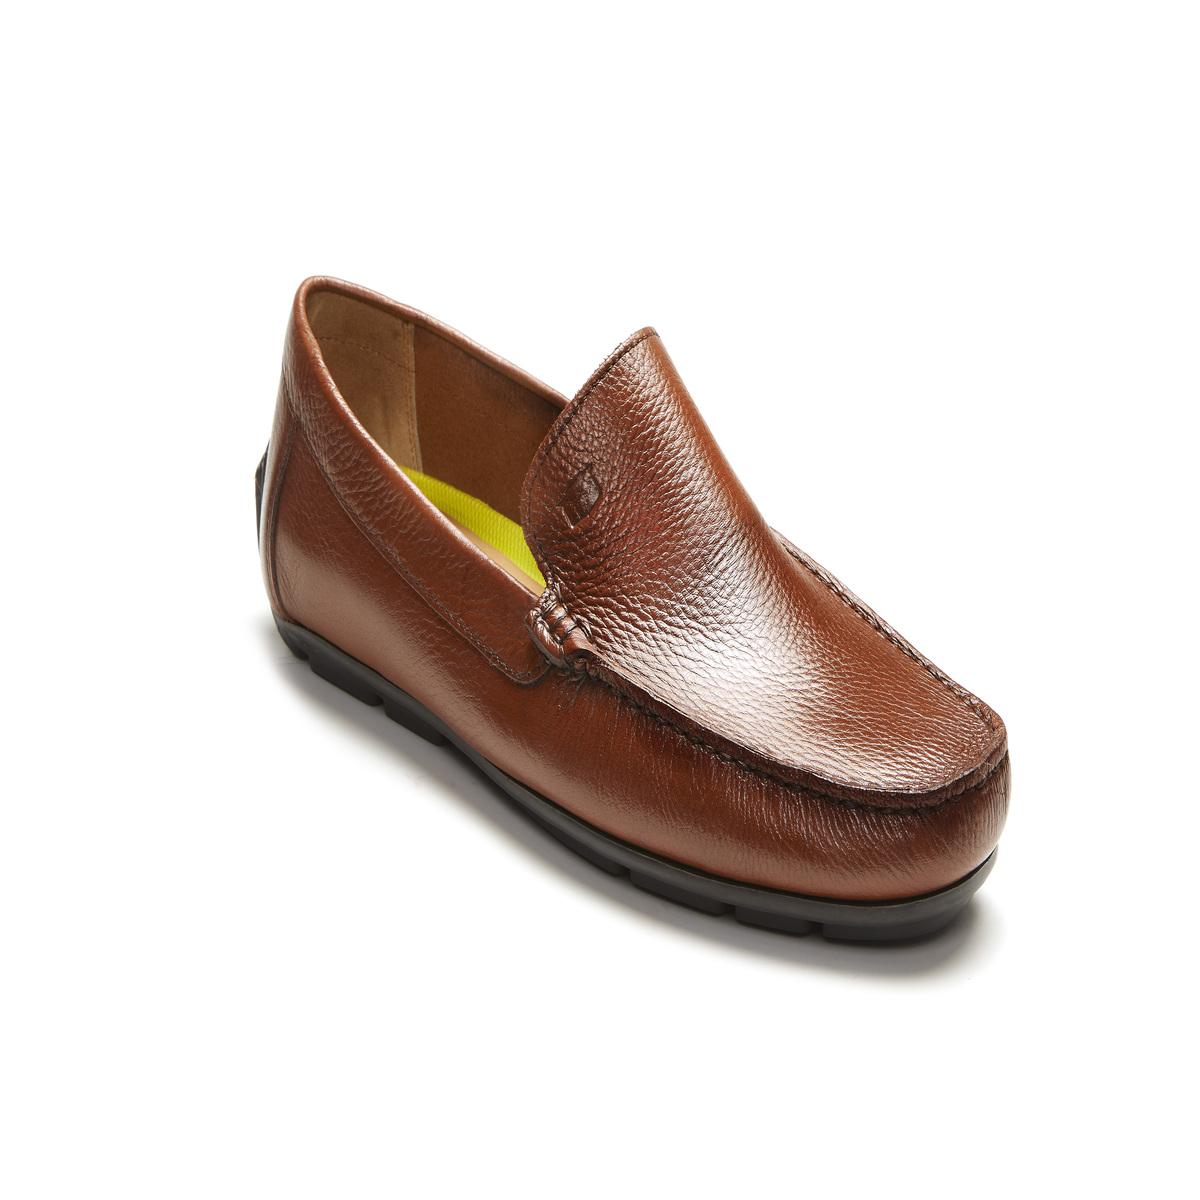 Buy Florsheim Tan Casual Loafers Online | SKU:281-104137-23-40 - Metro Shoes